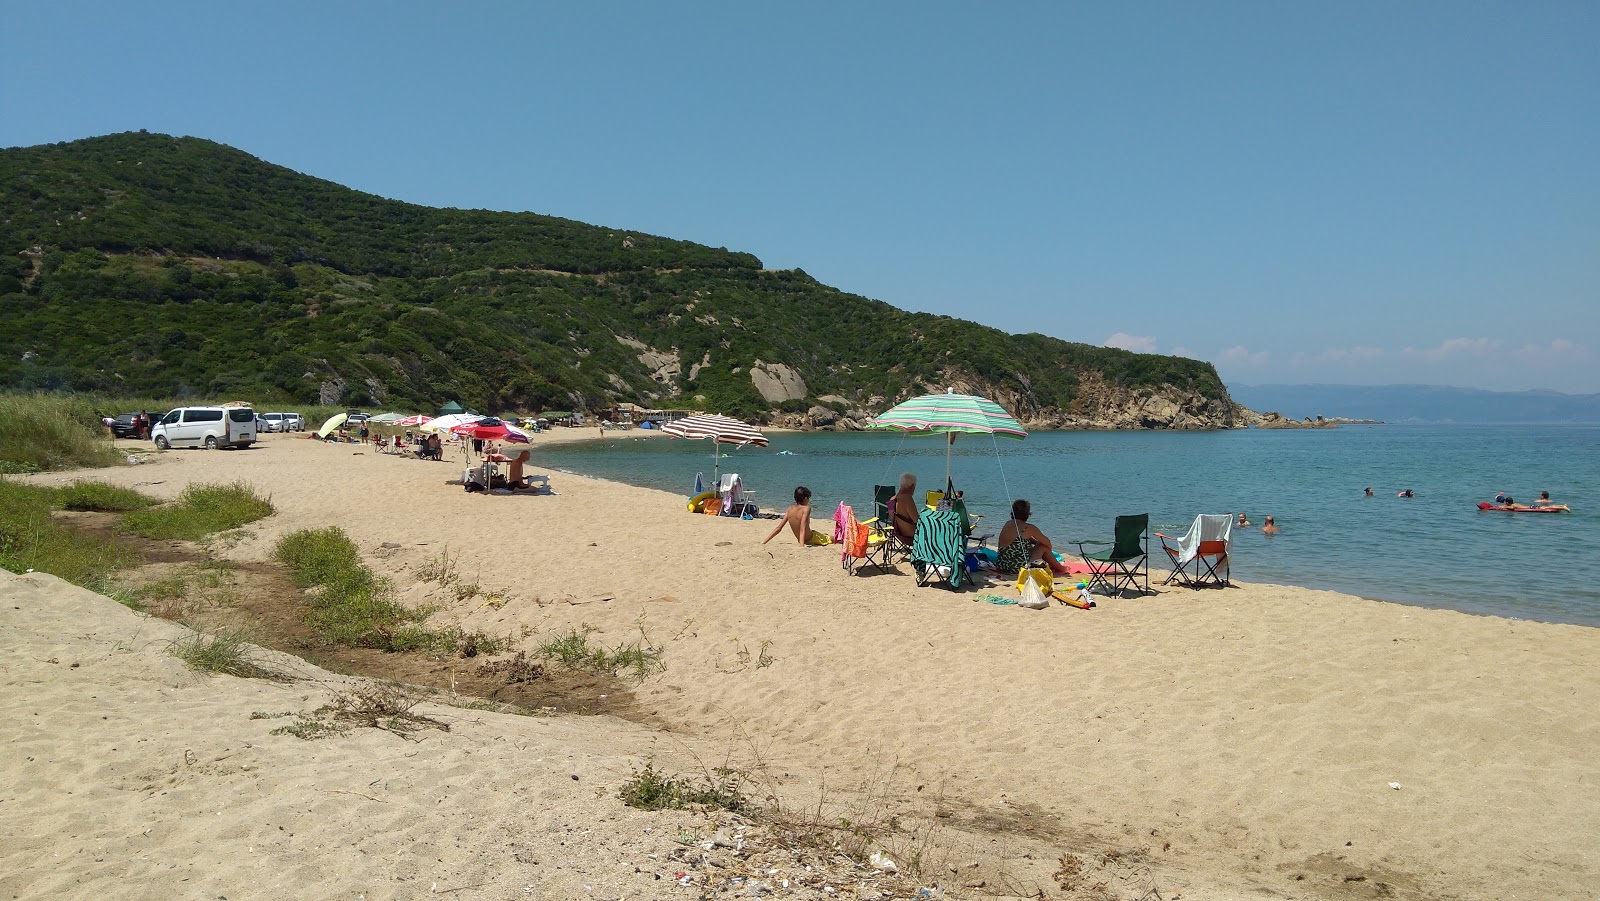 Foto af Manastir beach faciliteter område